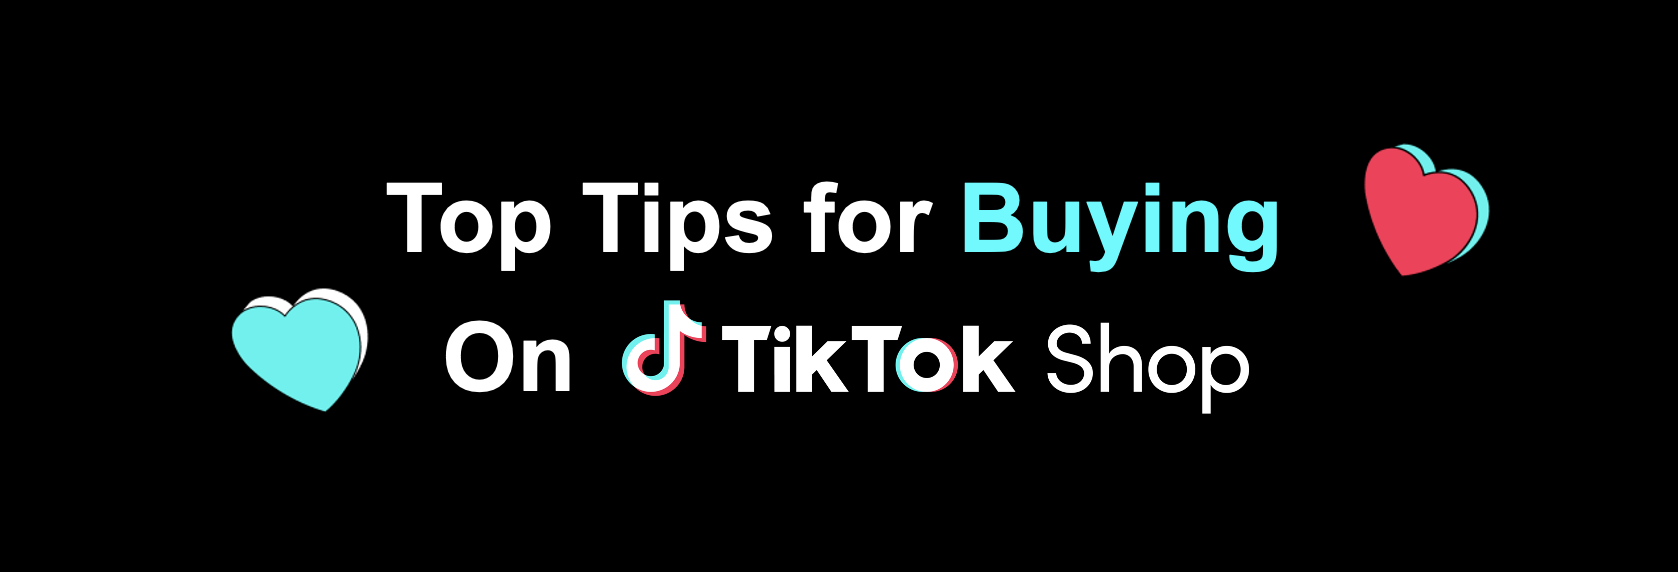 TikTok - Verified Account Sticker for Sale by TikTok Trends